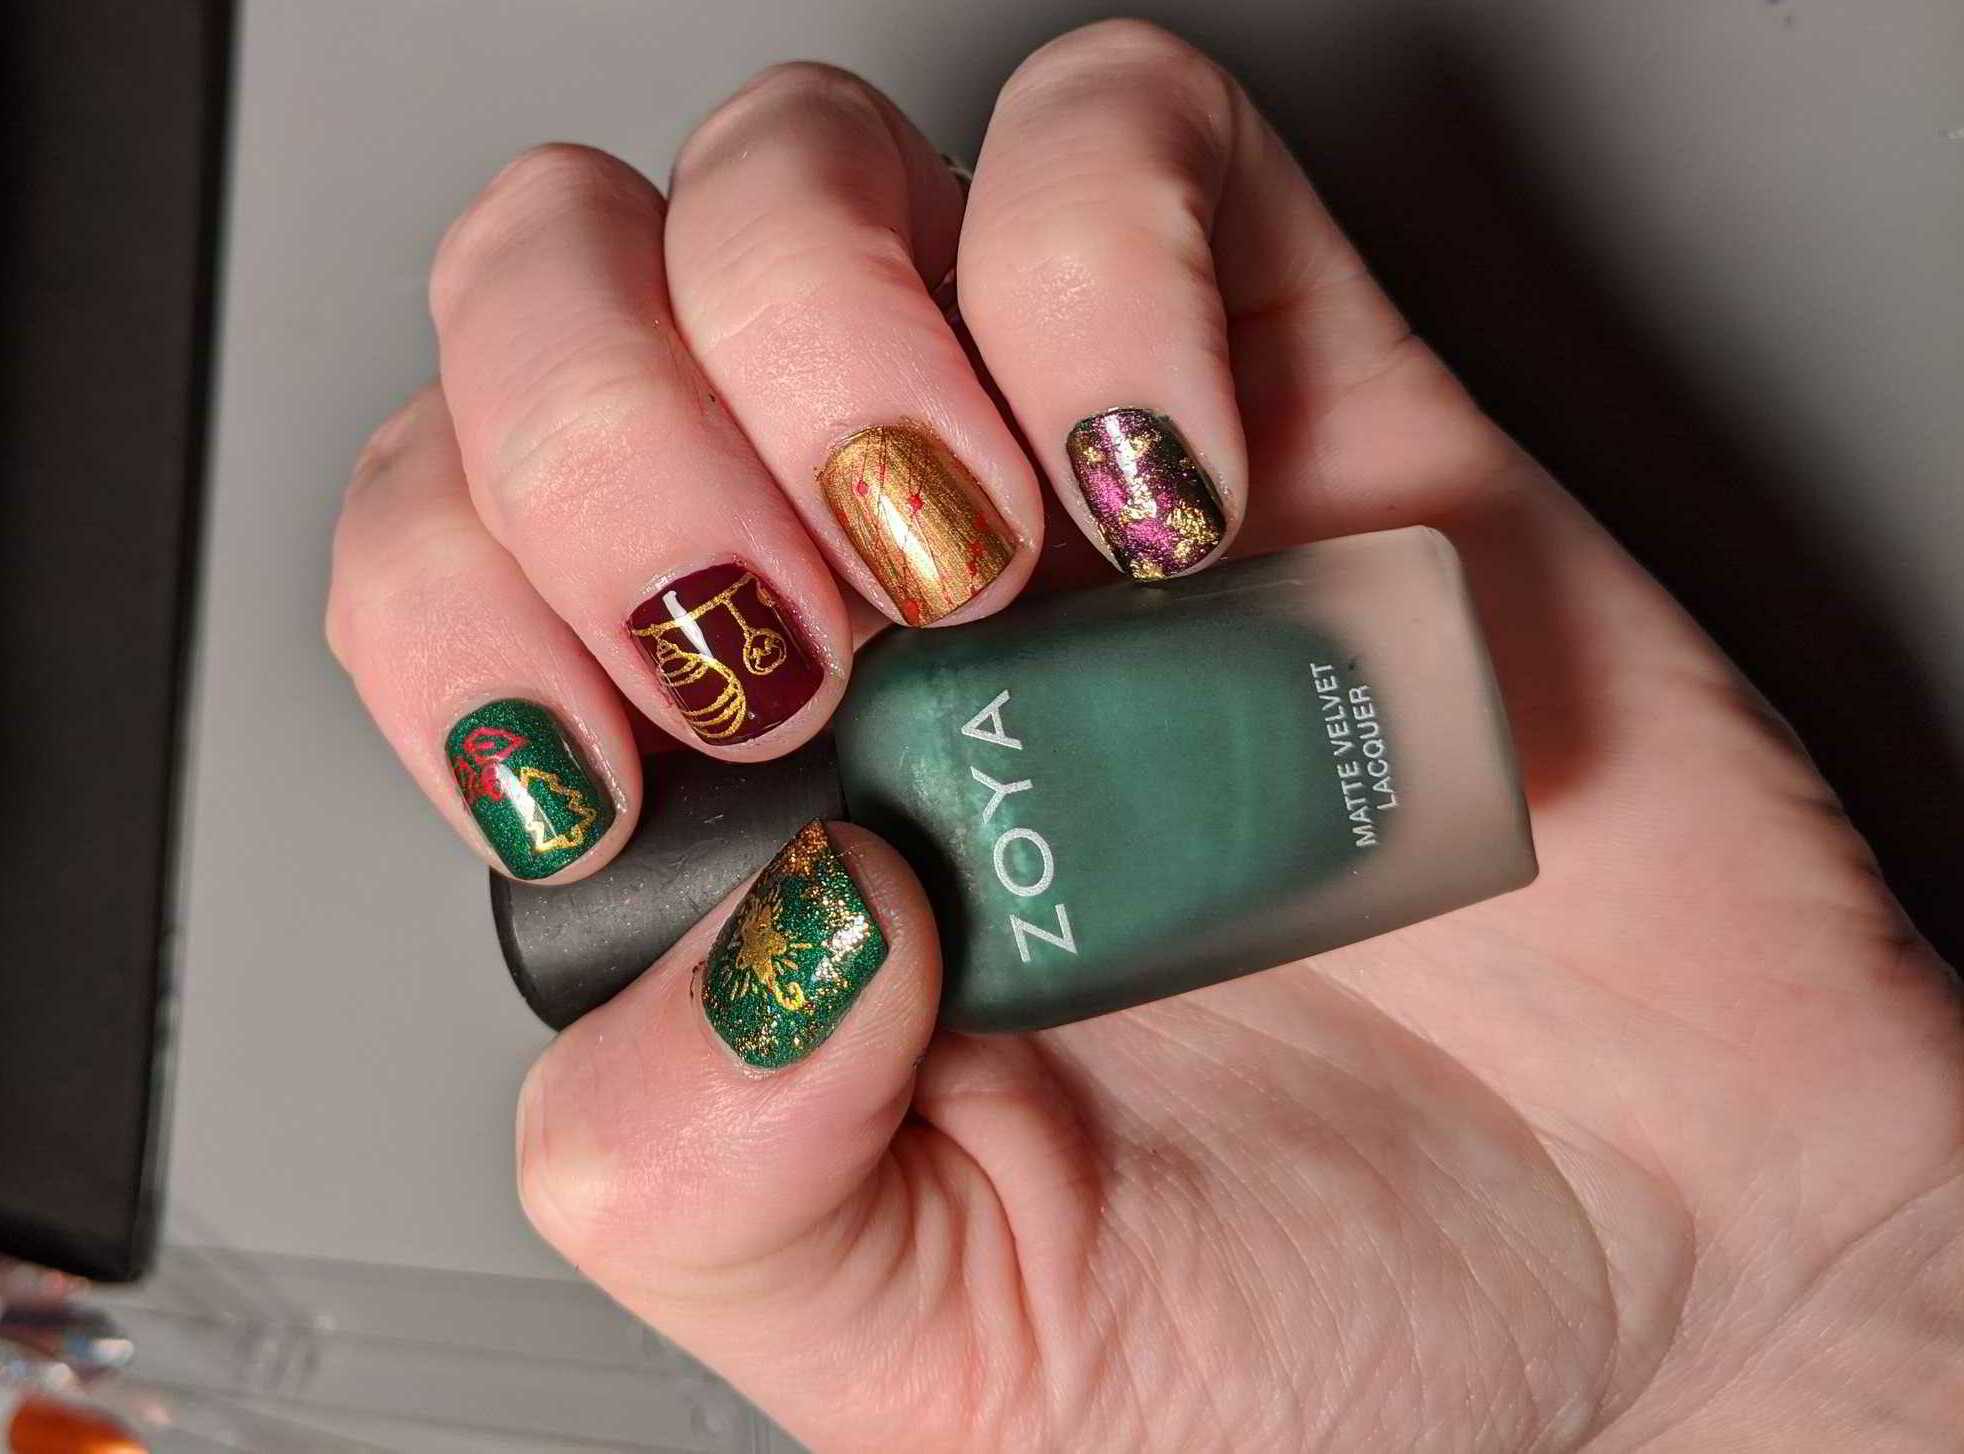 Nail polish manicure of shade Zoya Veruschka